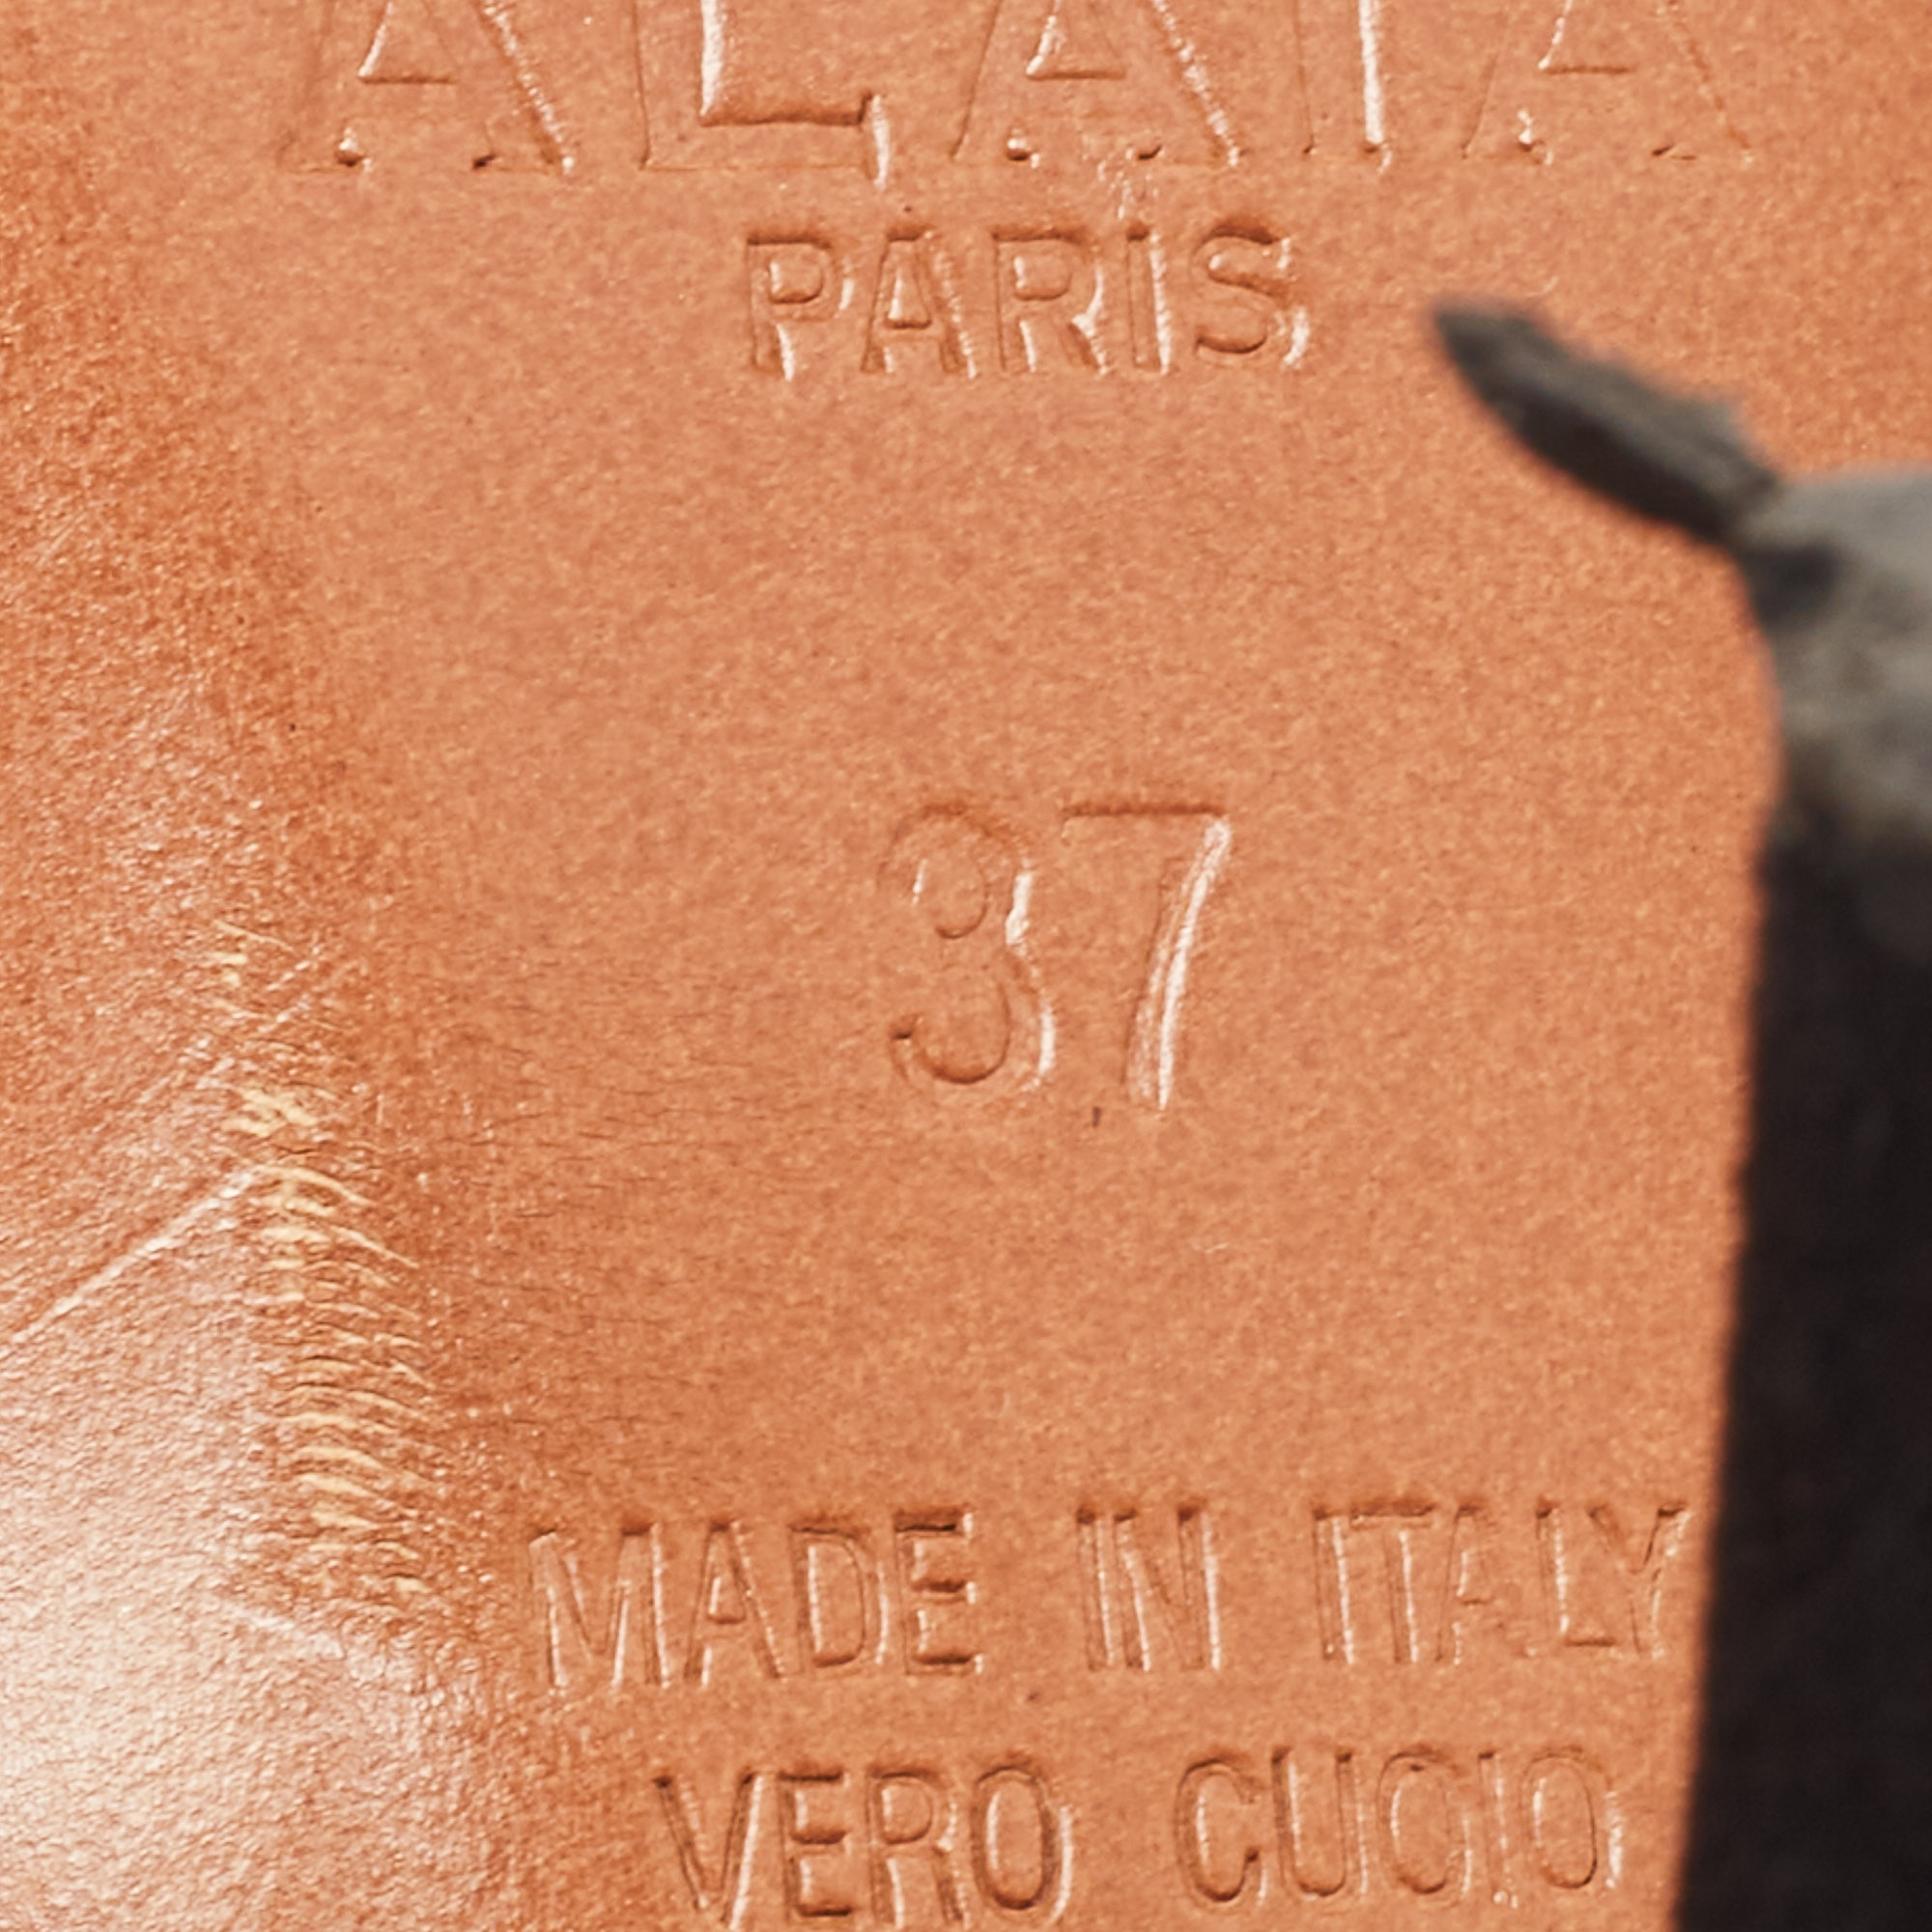 Alaia Black/Beige Suede Slip On Sandals Size 37